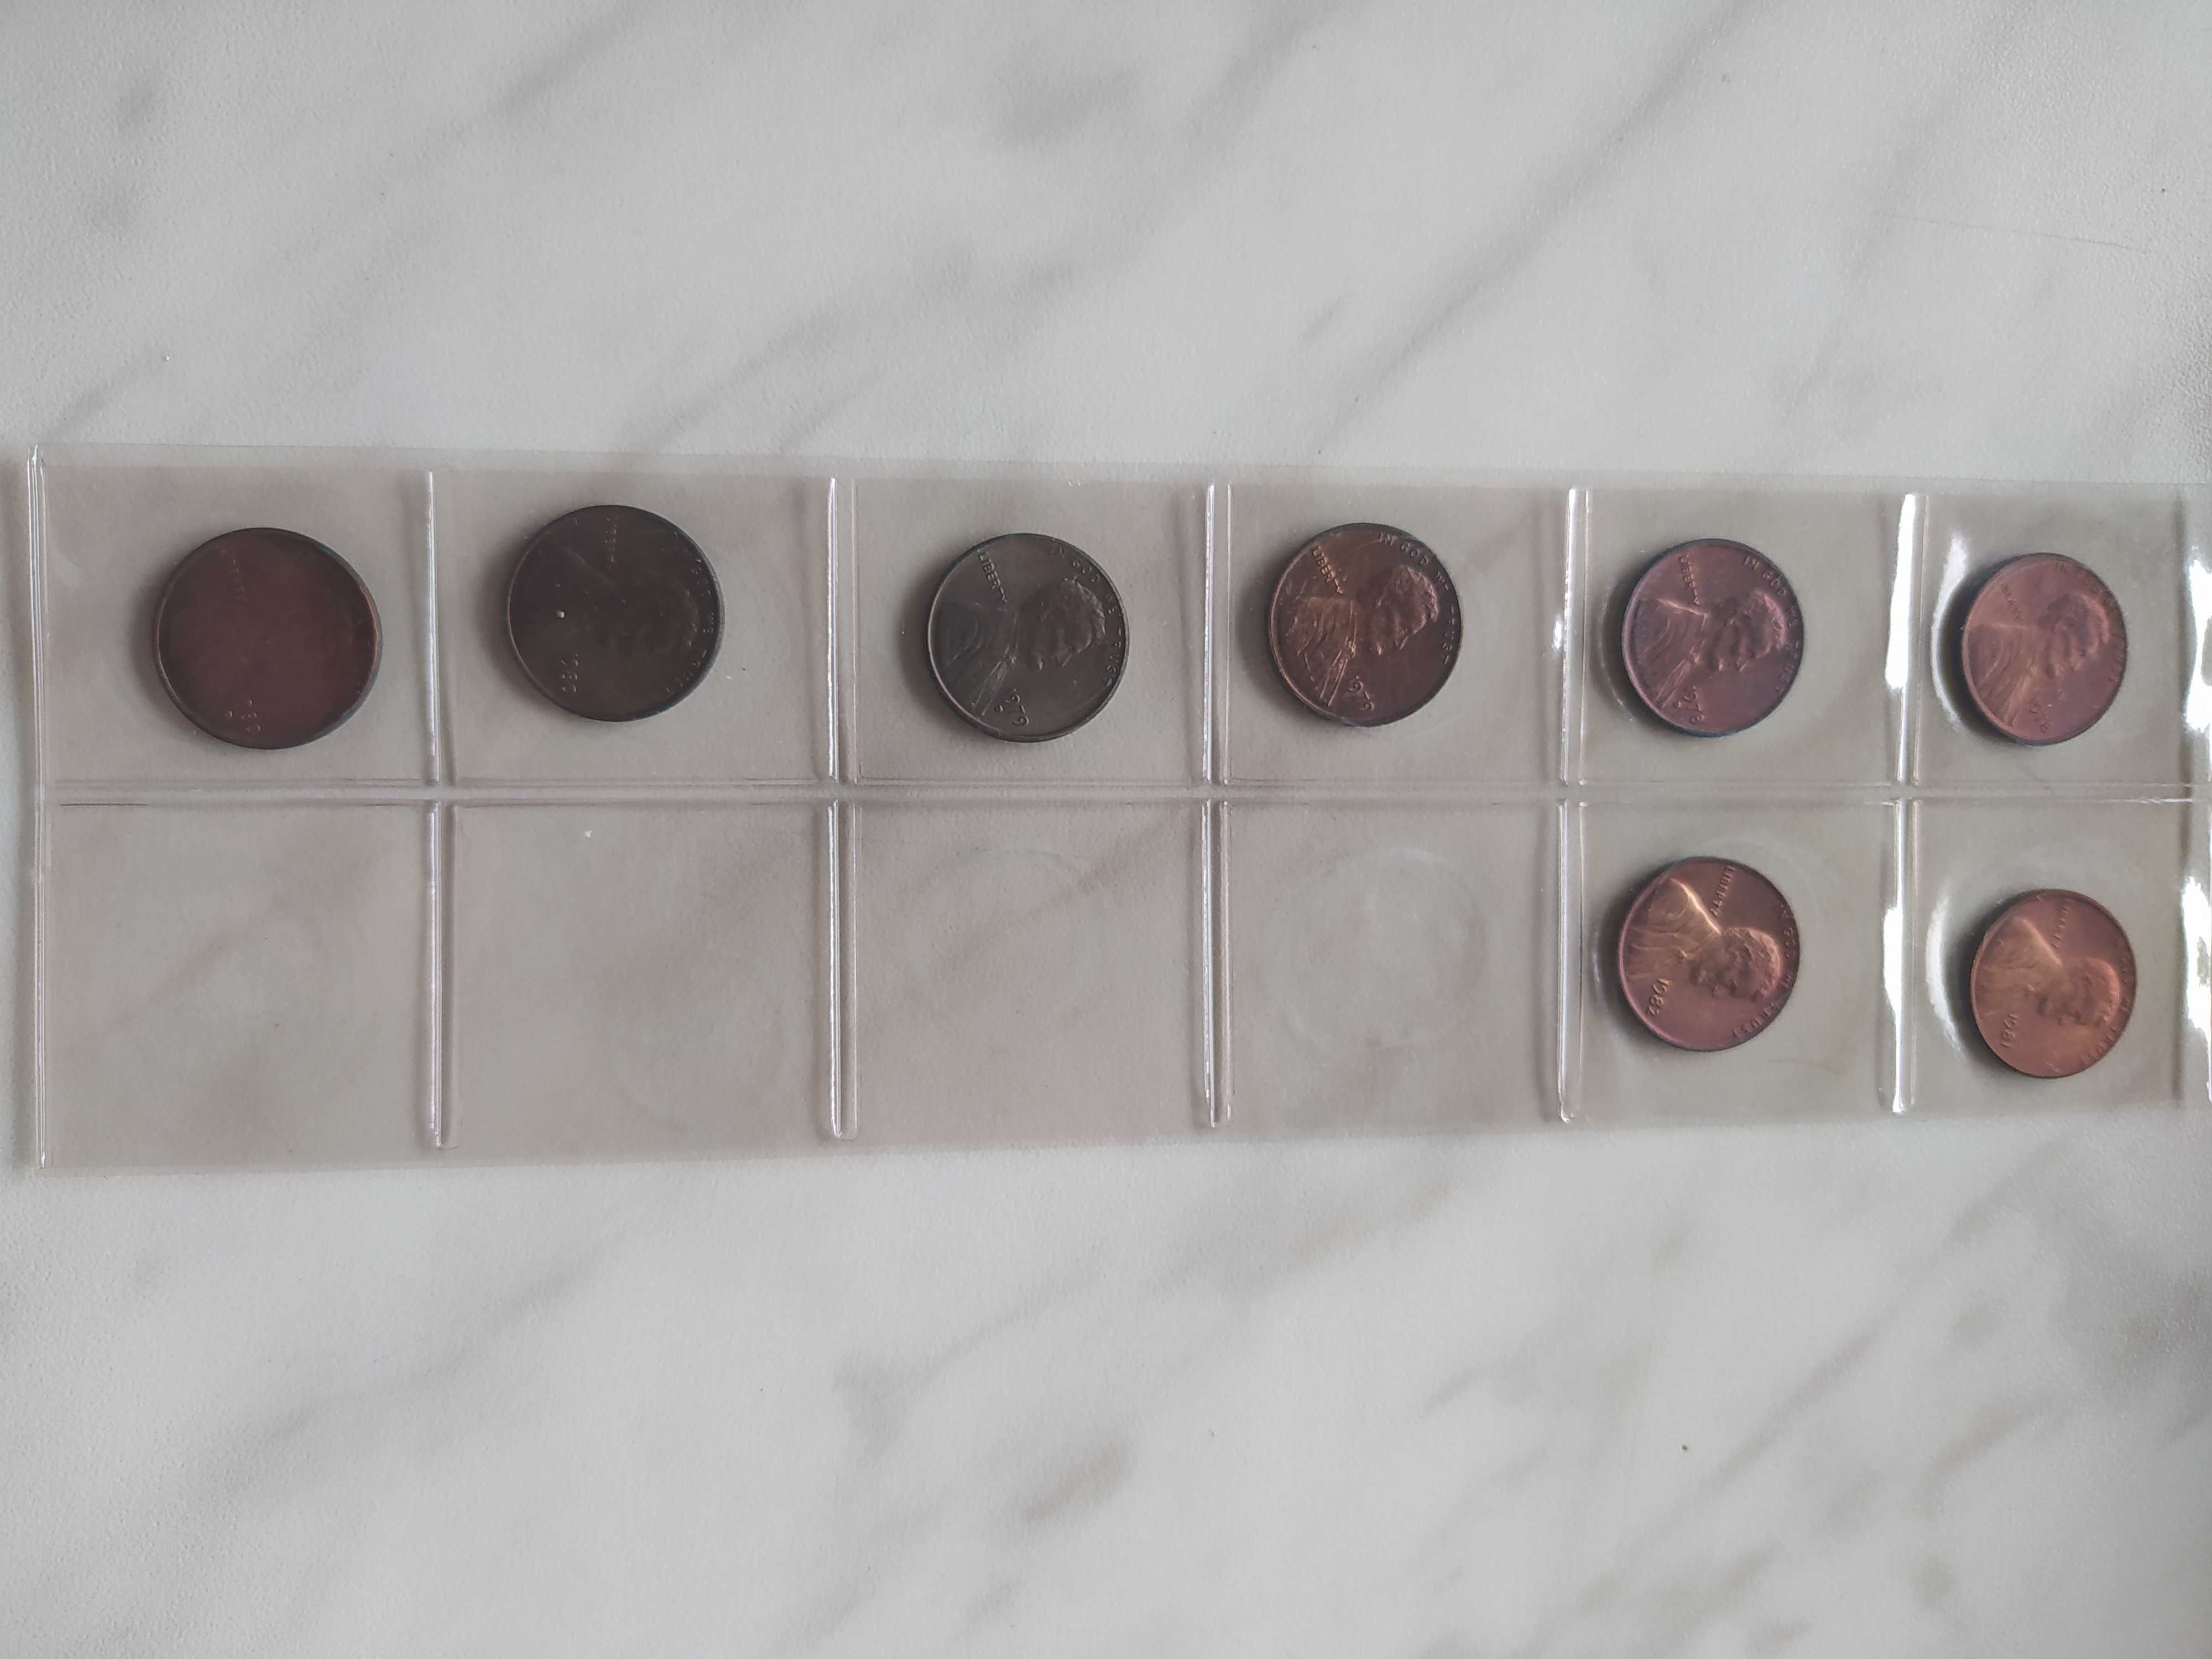 monety 1 cent USA - kolekcja